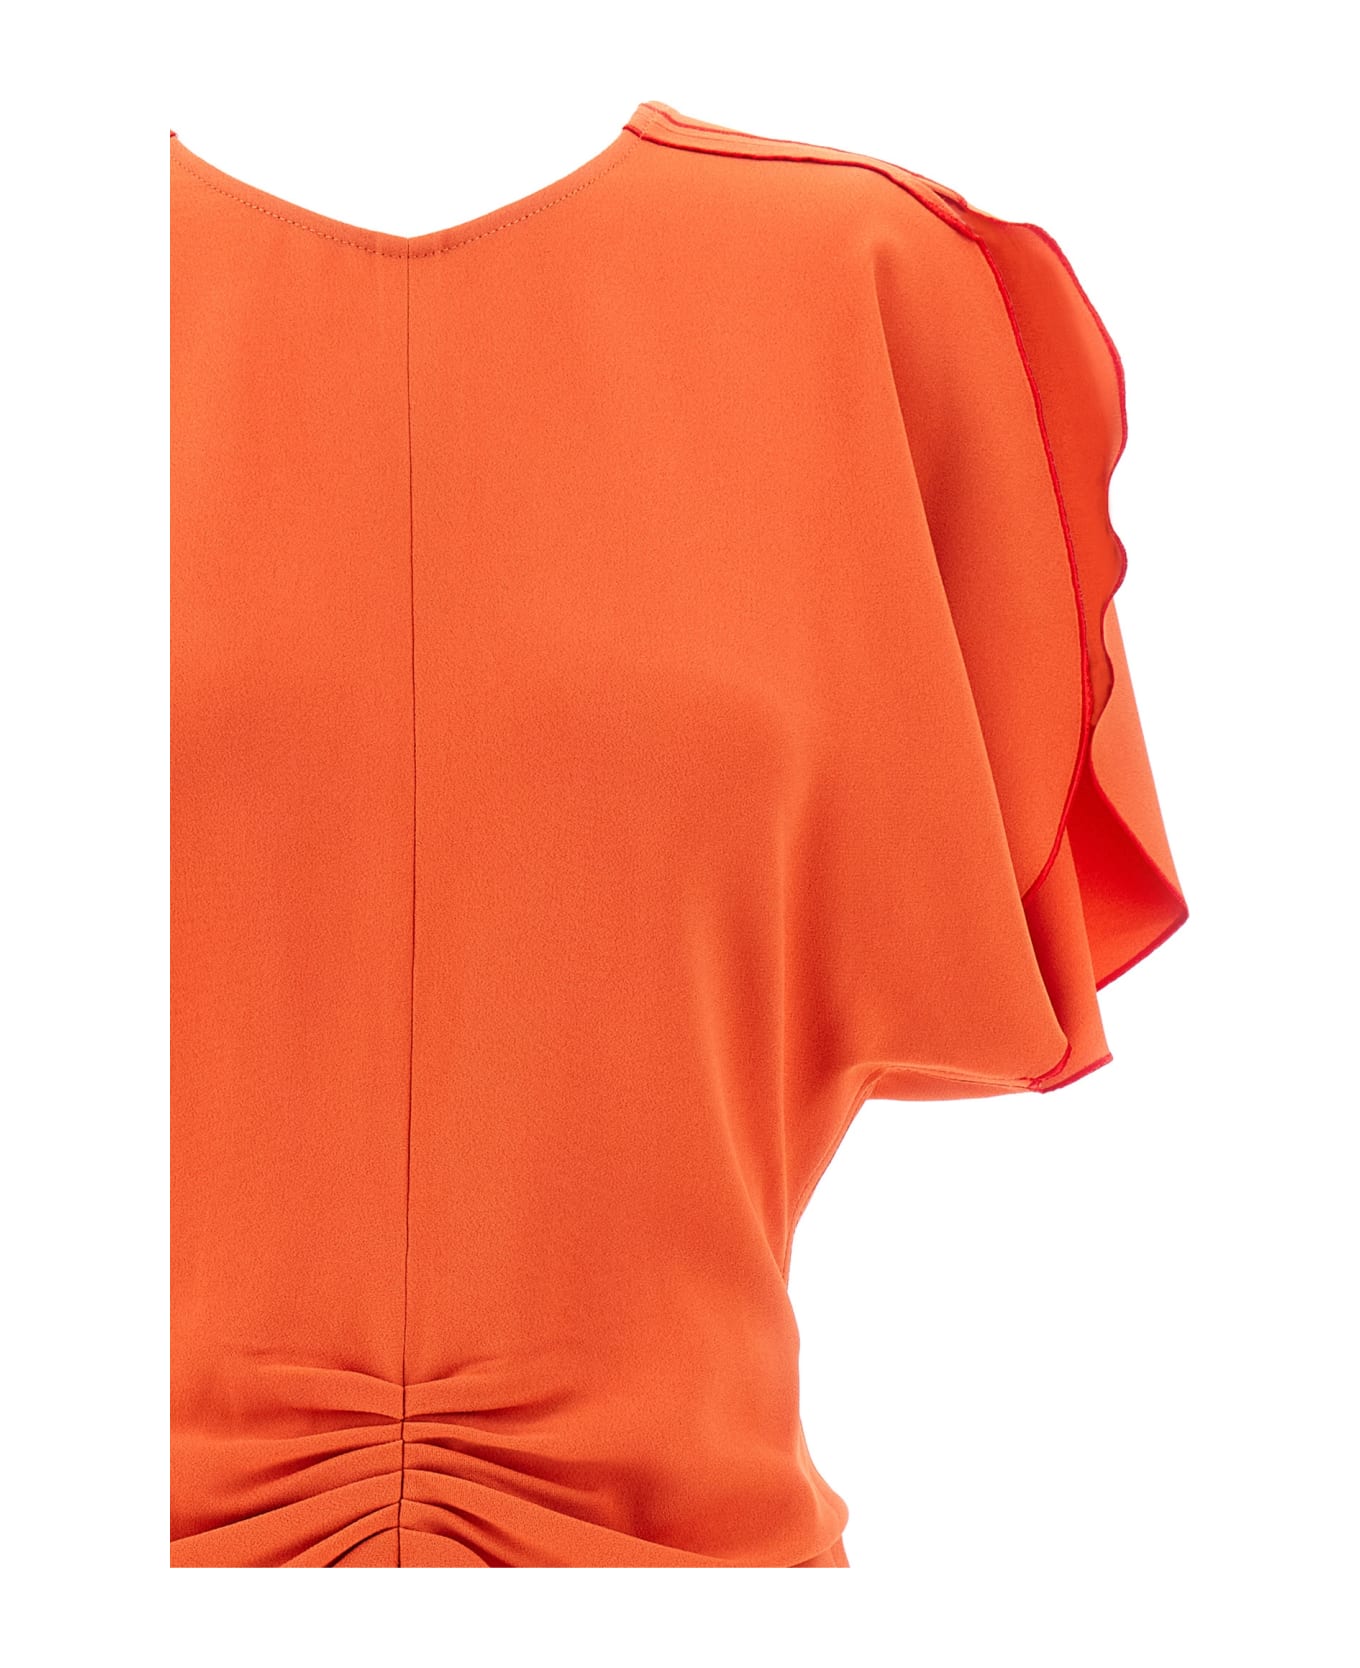 Victoria Beckham 'gathered Waist' Midi Dress - Orange